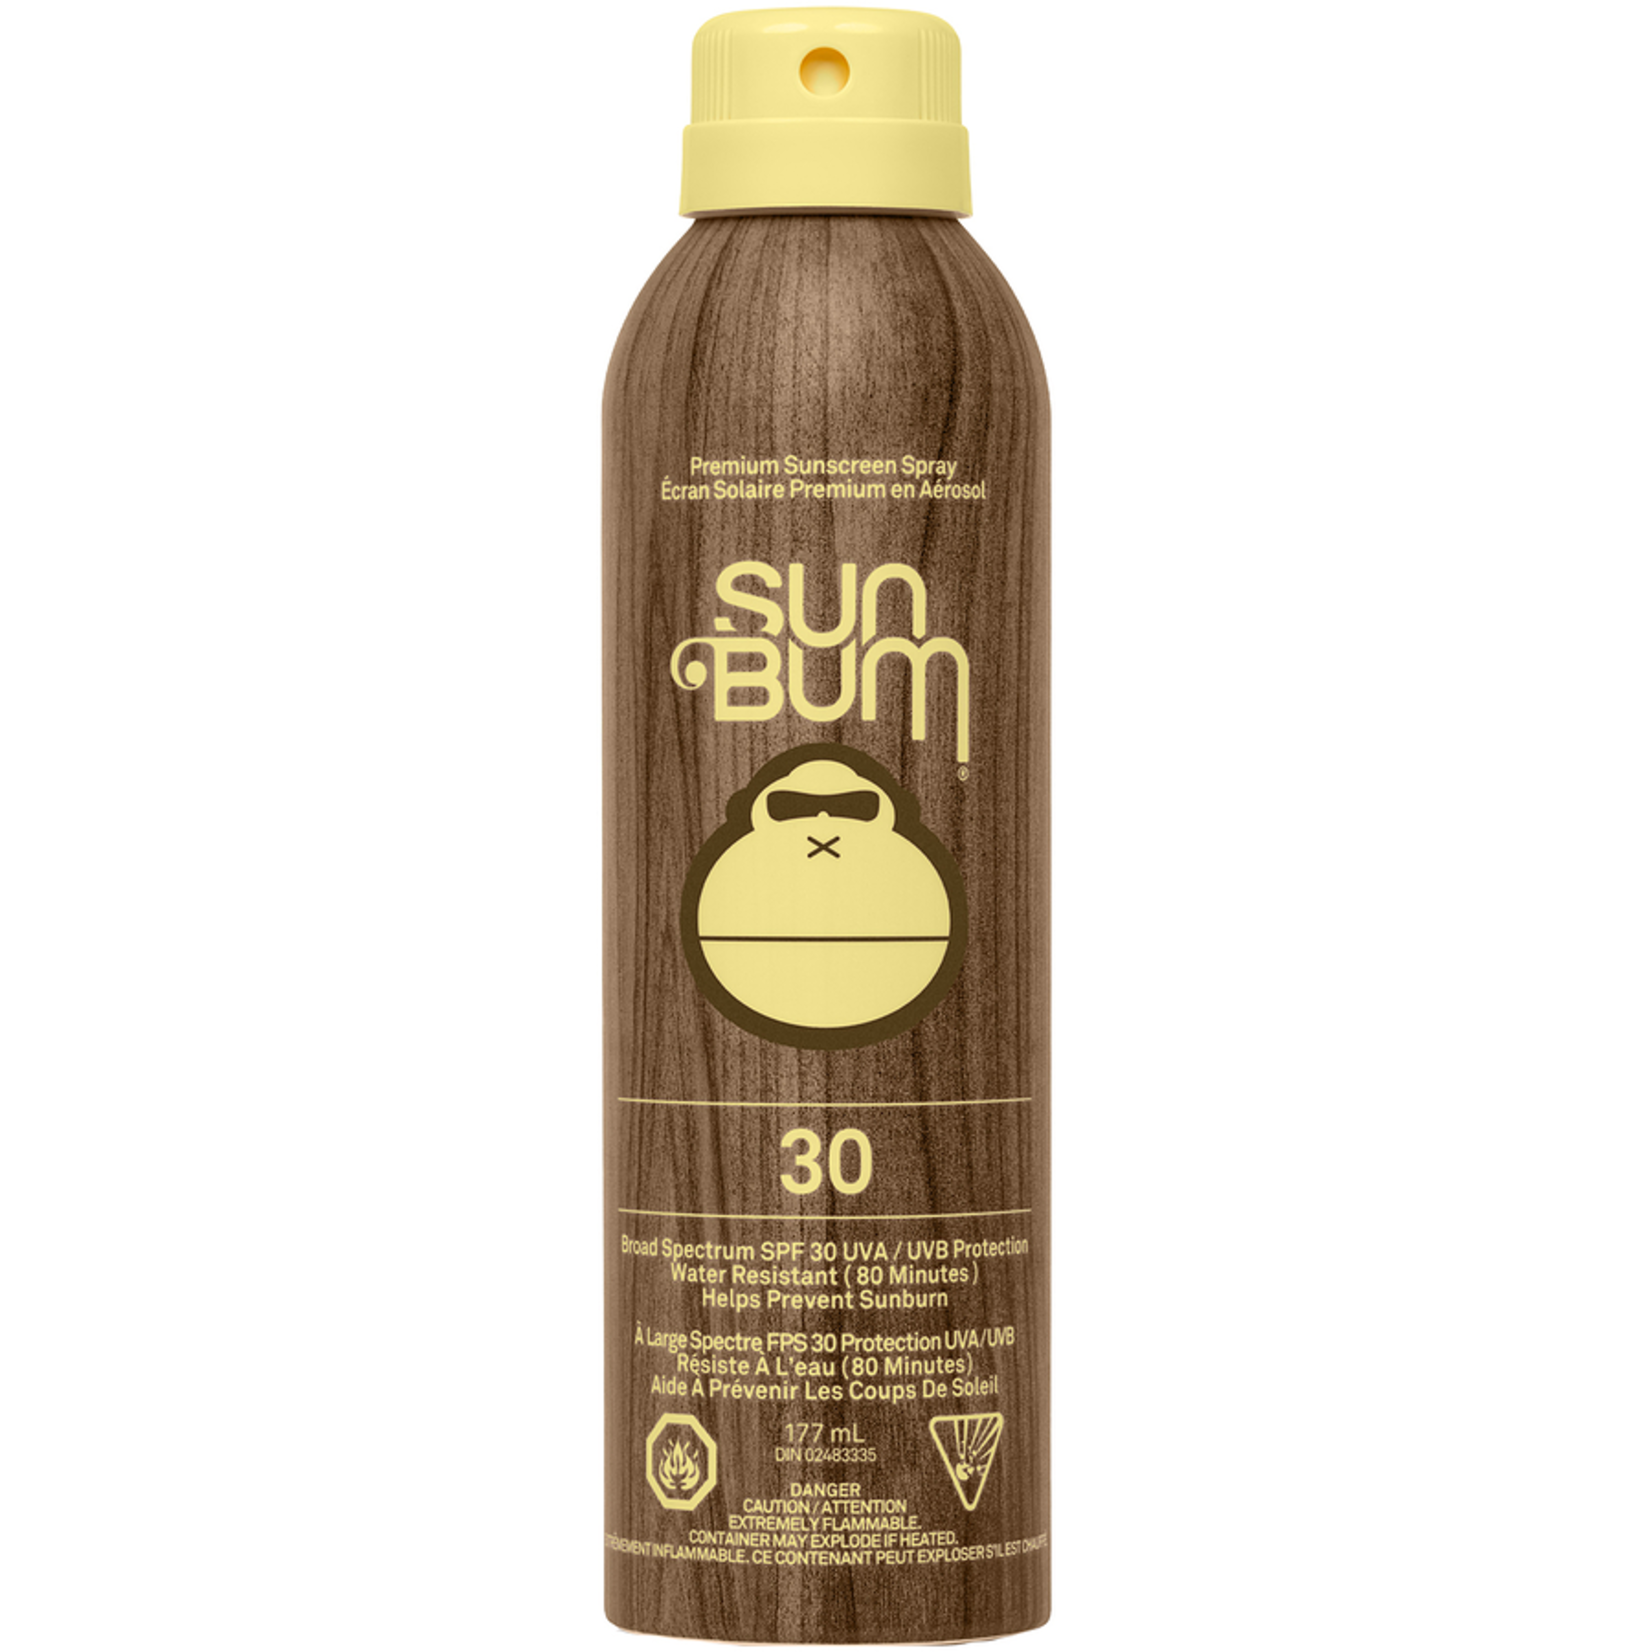 Sun Bum Sun Bum - Original SPF 30 Sunscreen Spray